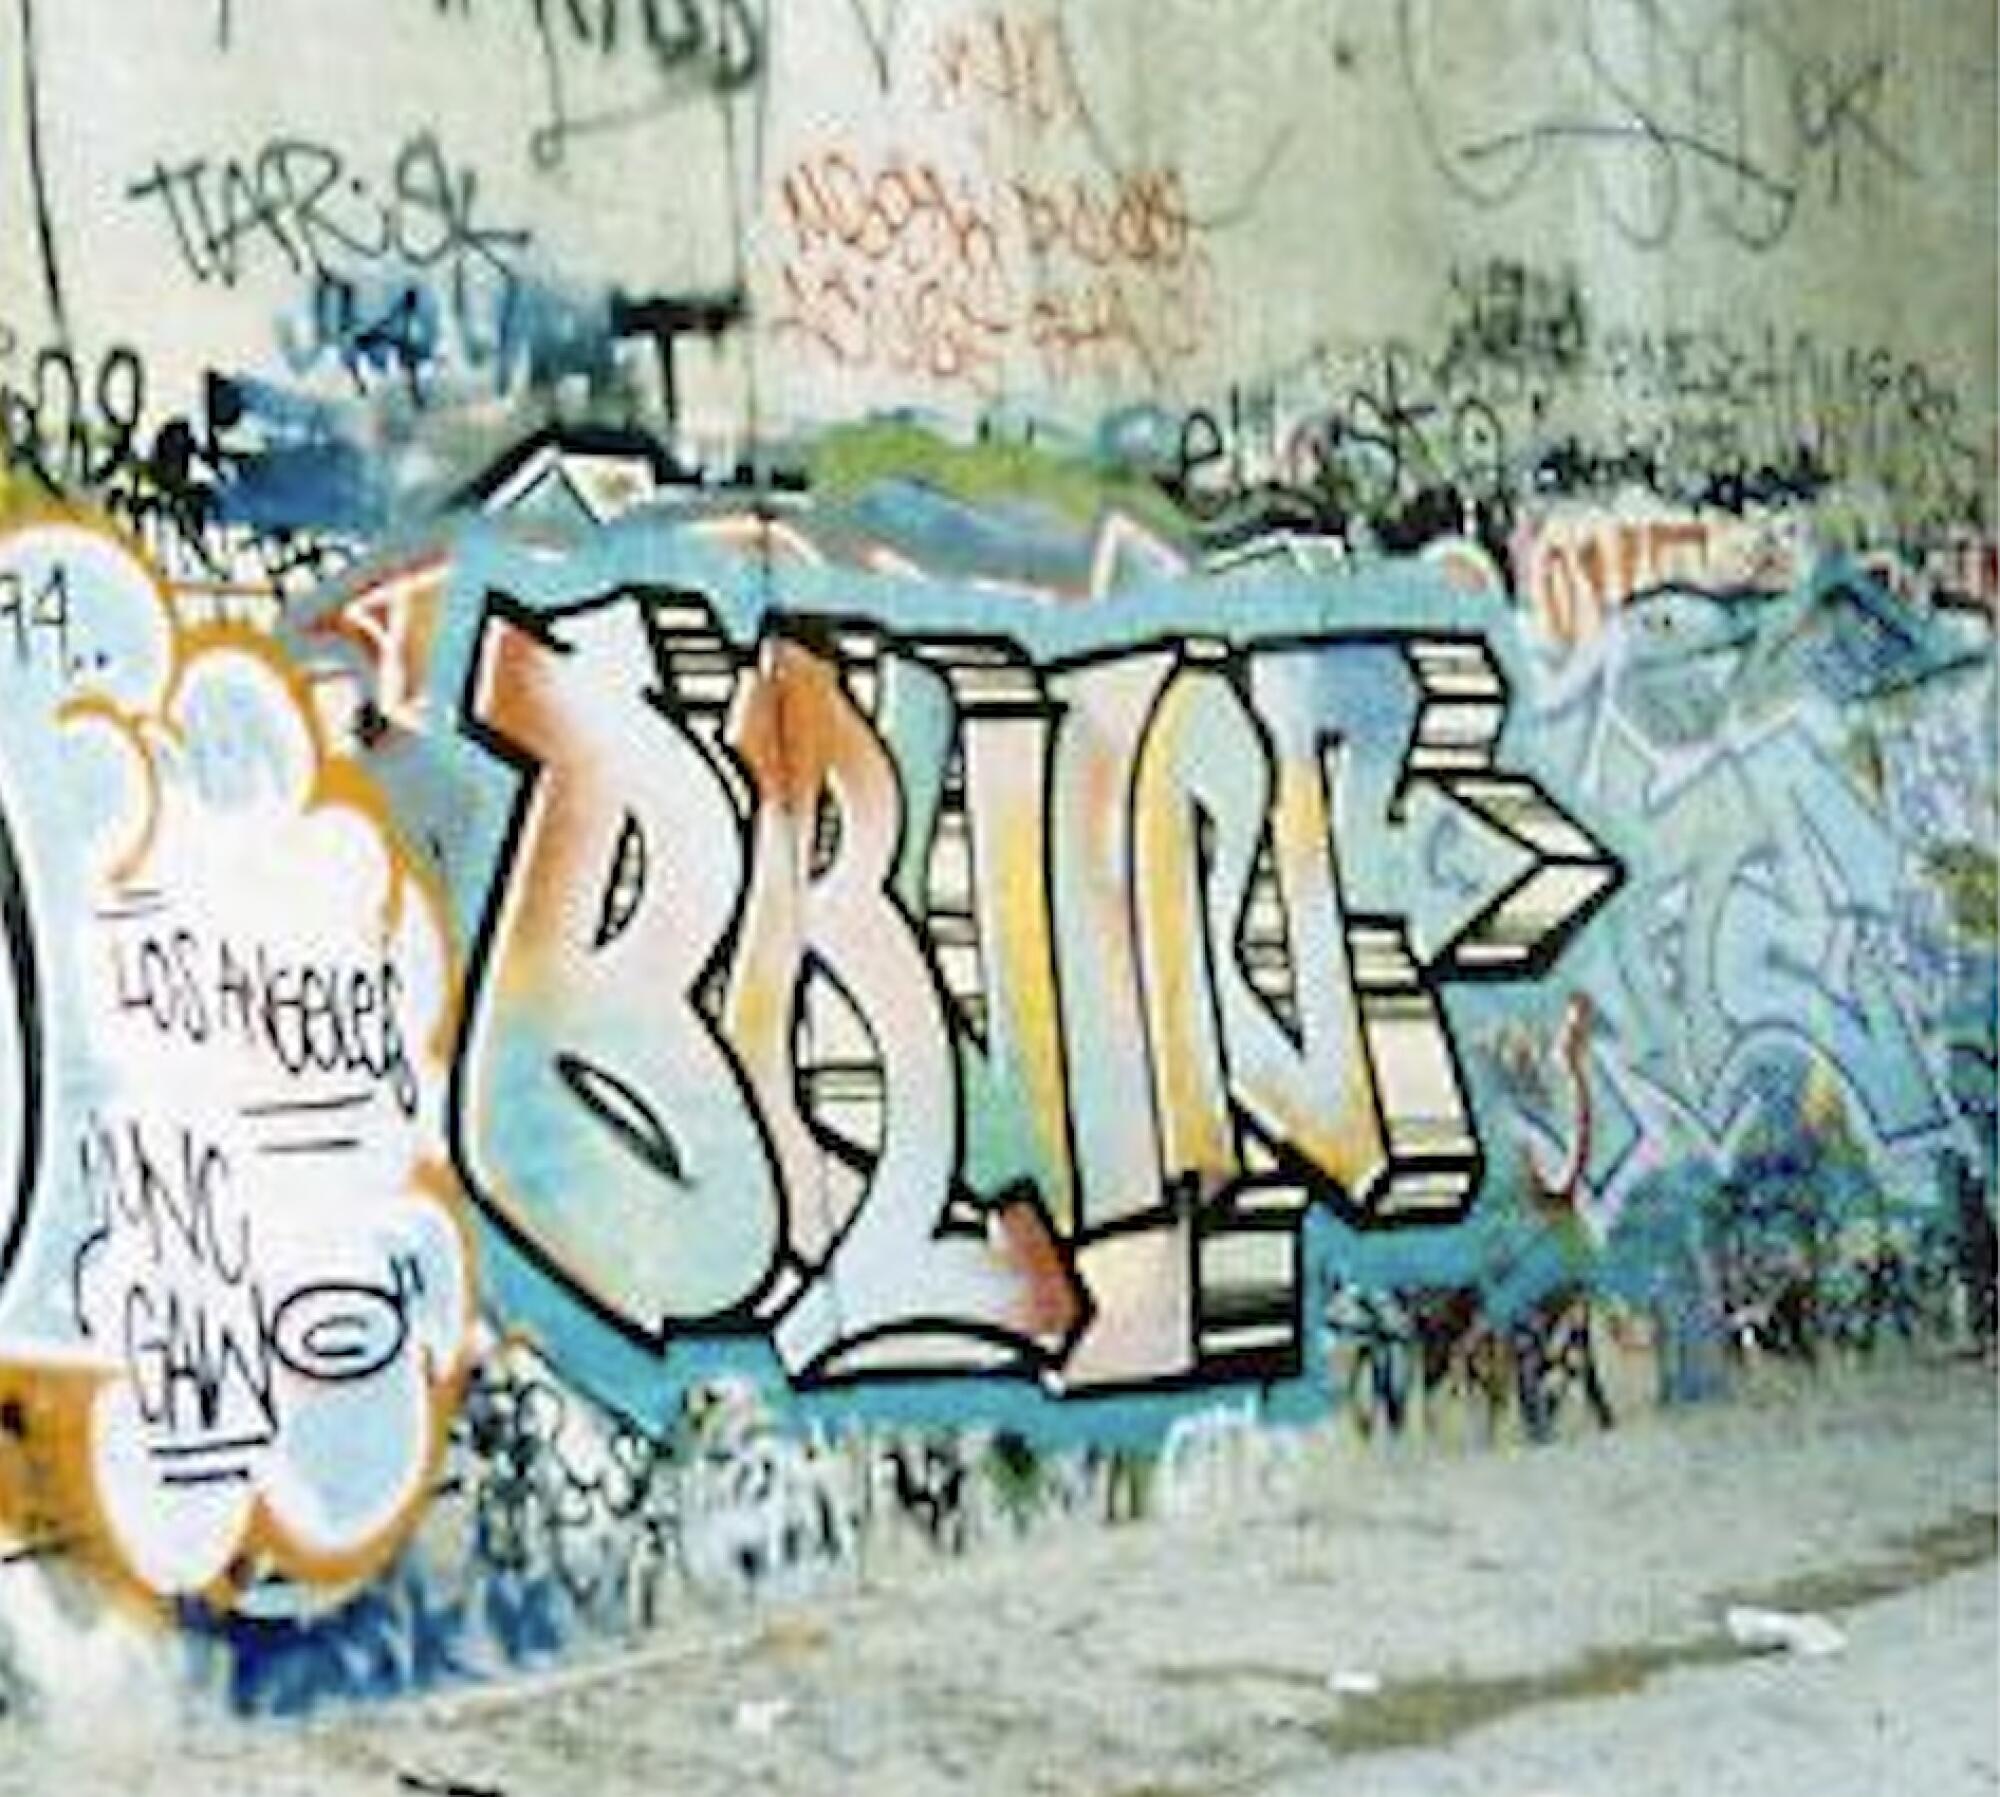 A graffiti piece on a wall.